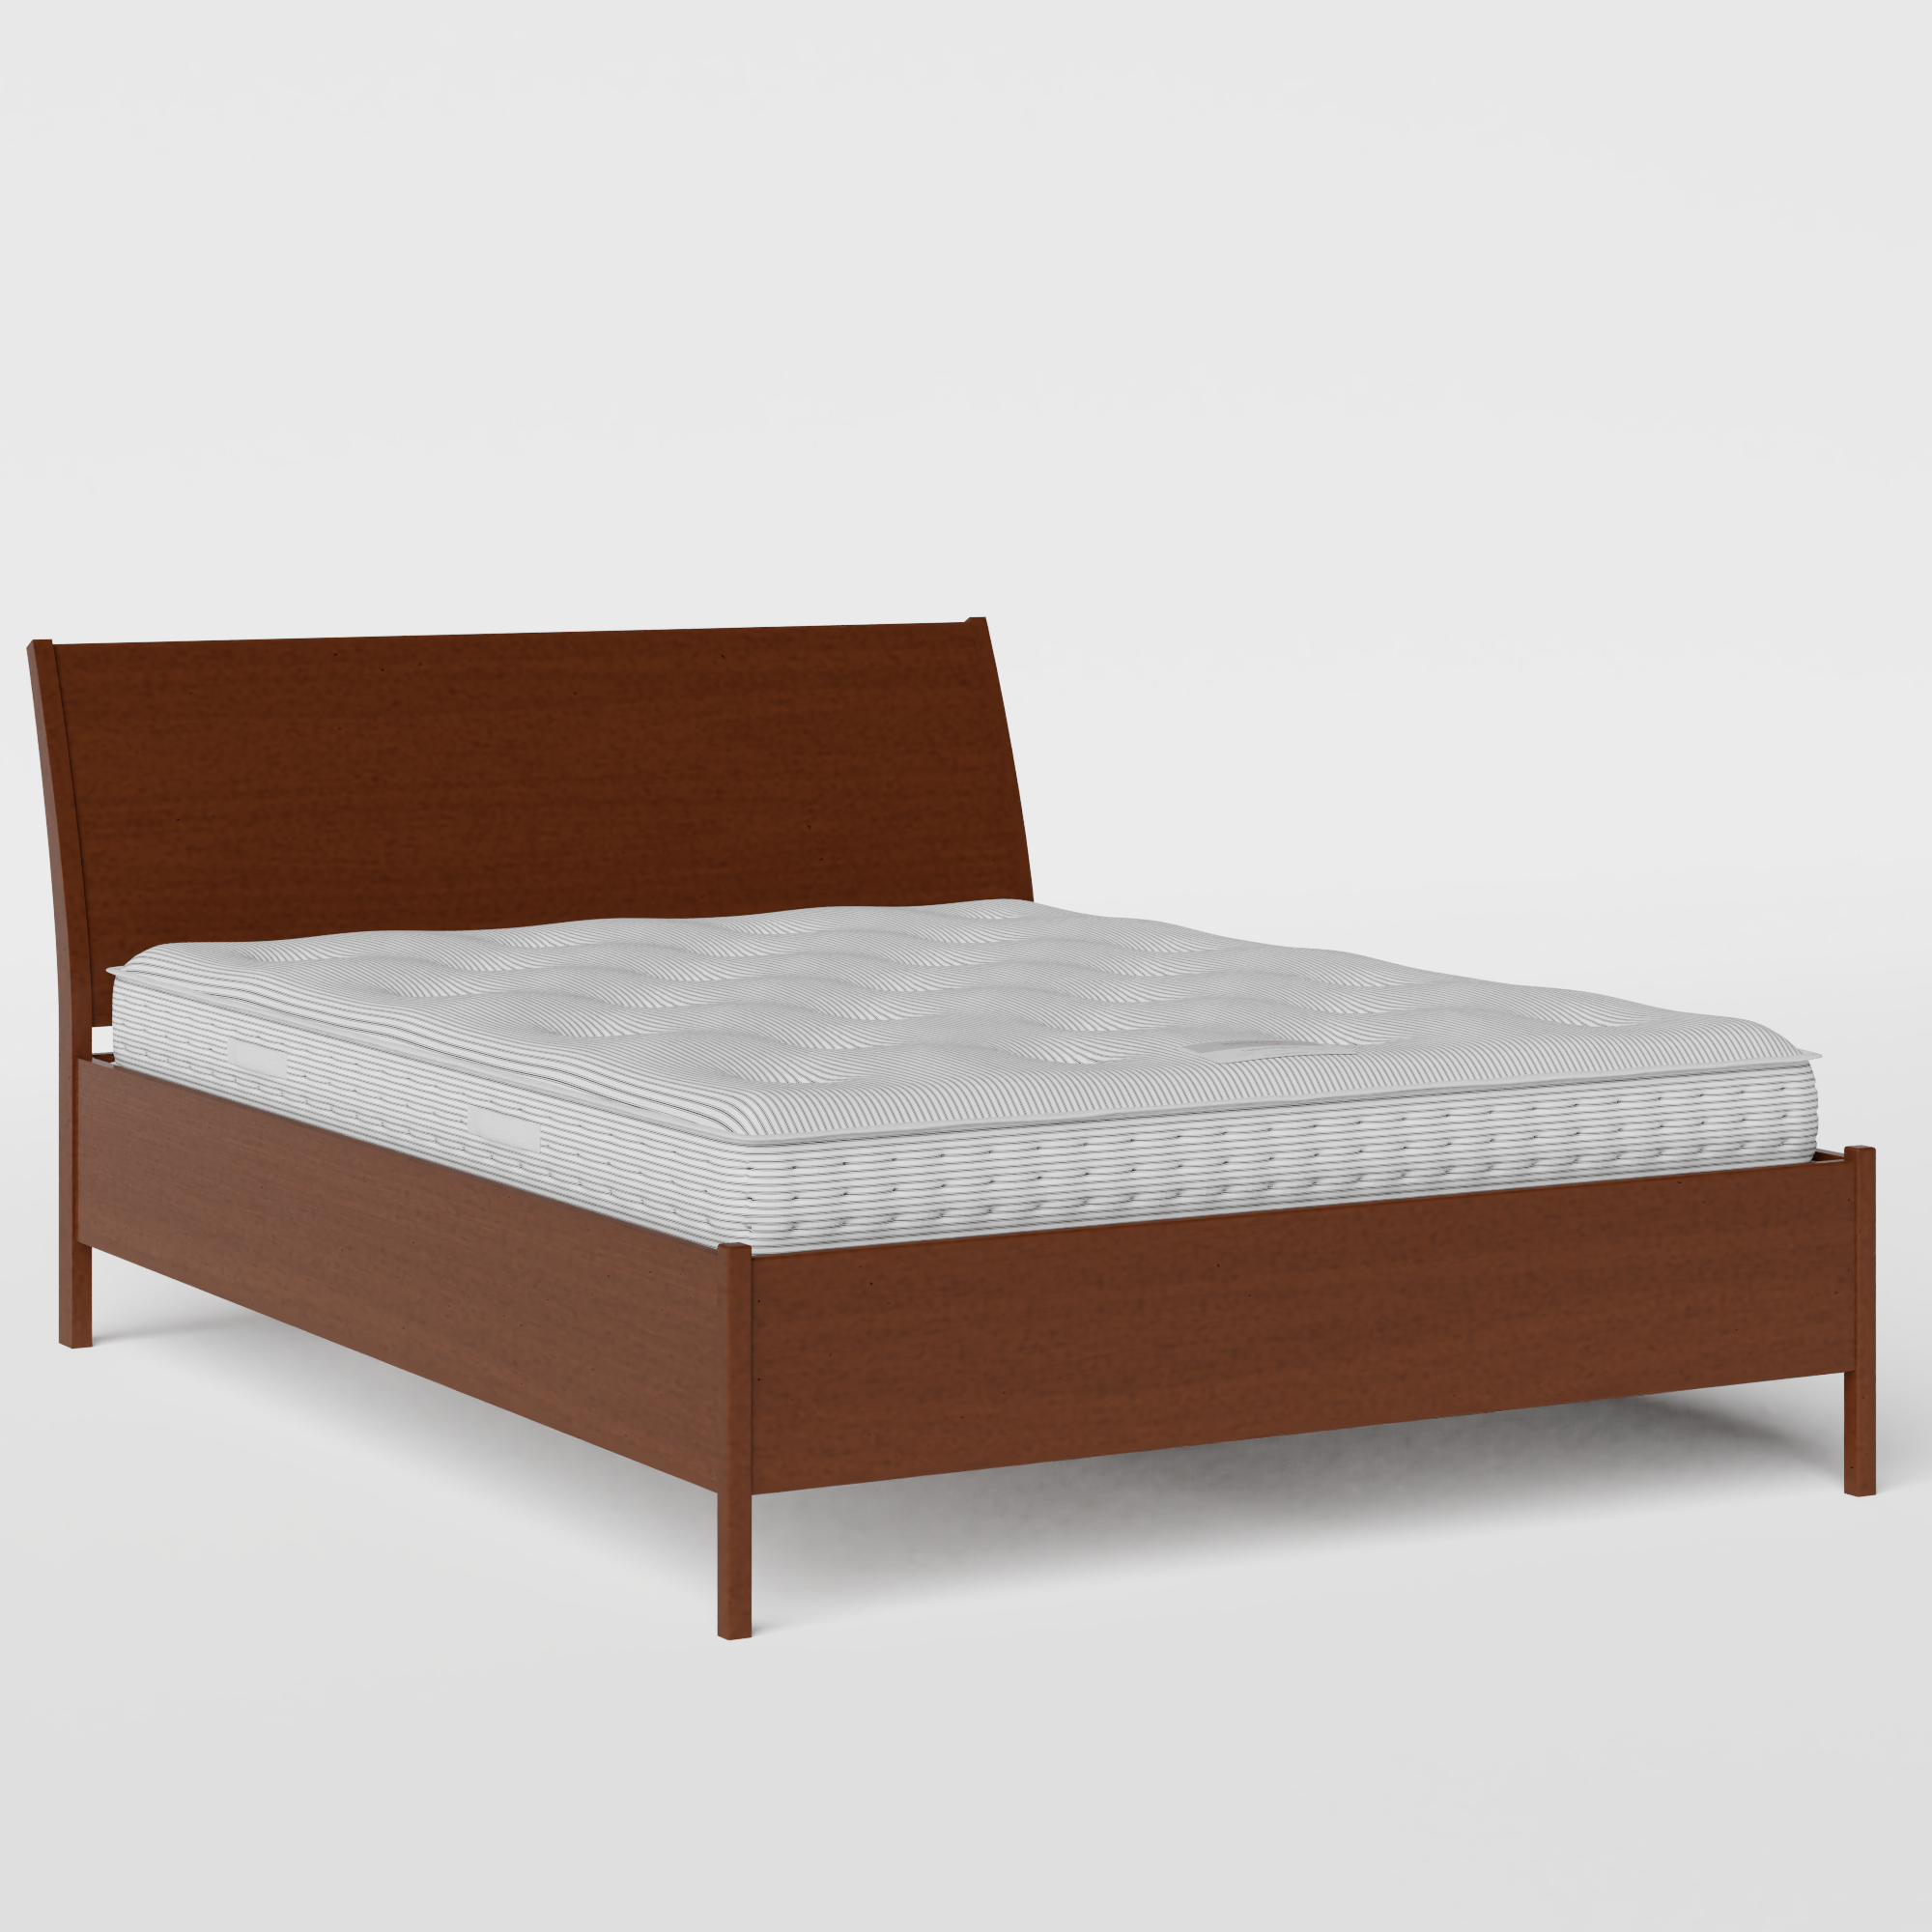 Hunt wood bed in dark cherry with Juno mattress